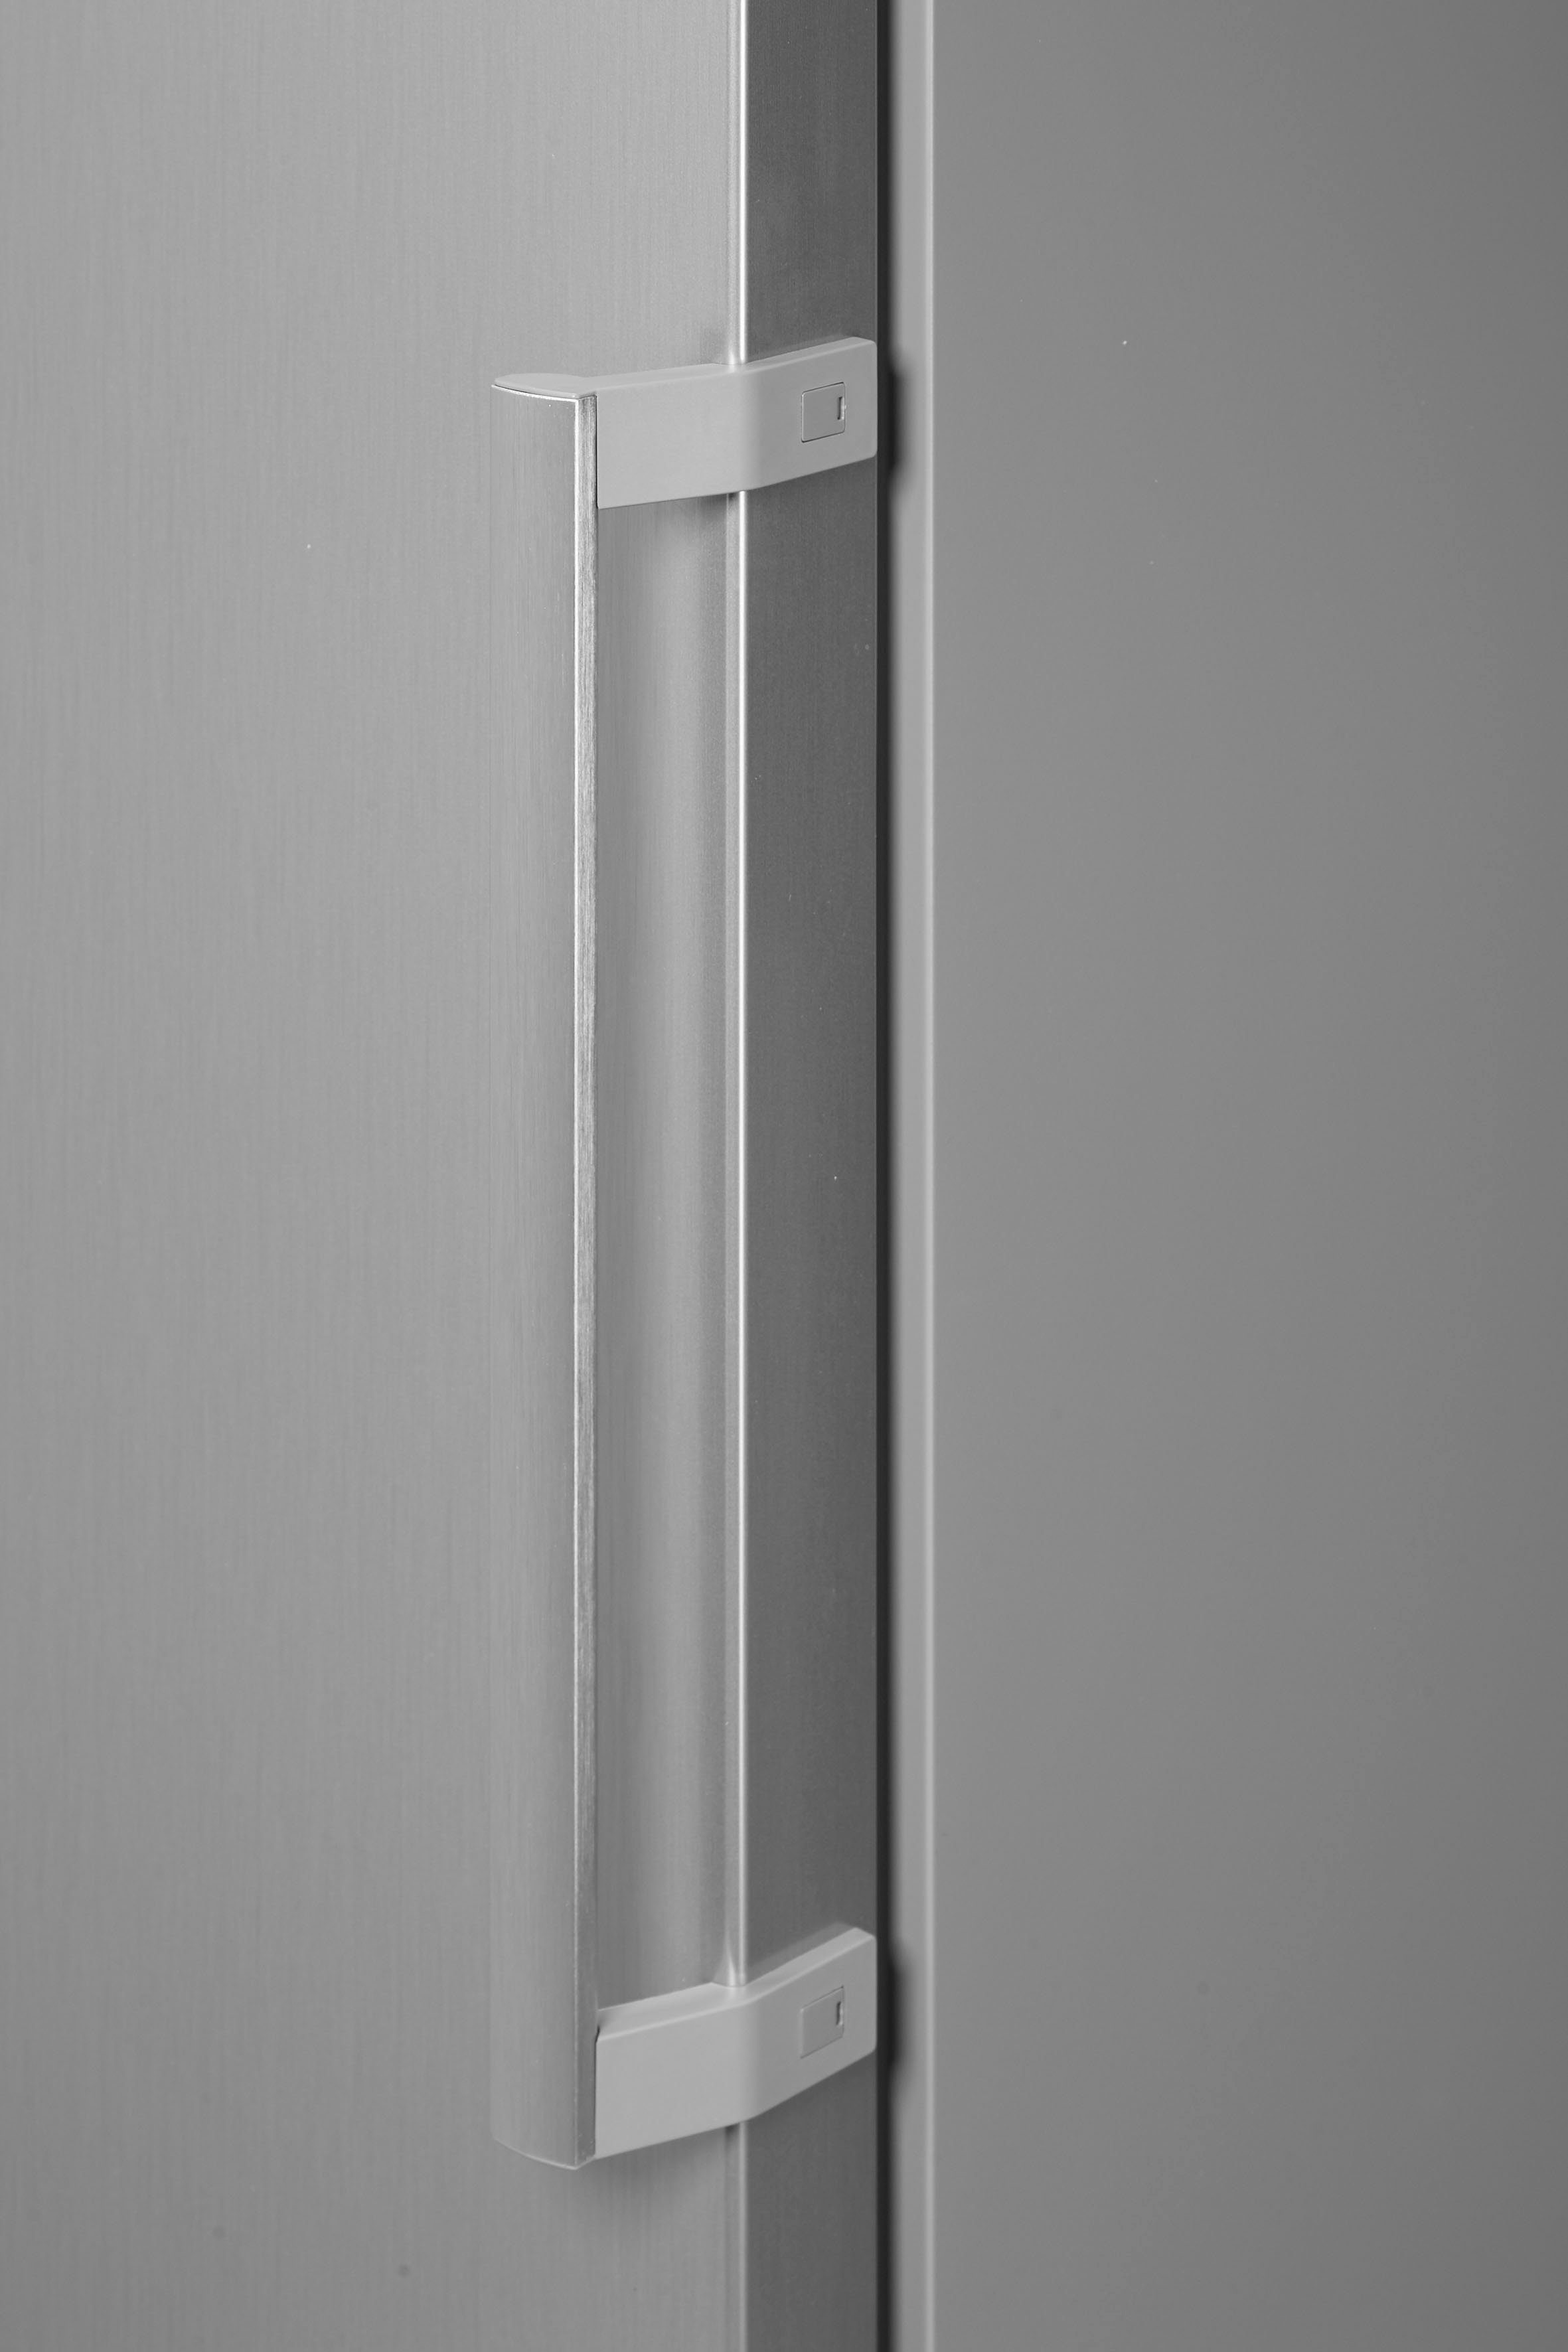 BOSCH Kühlschrank hoch, breit KSV36VLDP, 60 186 4 cm cm